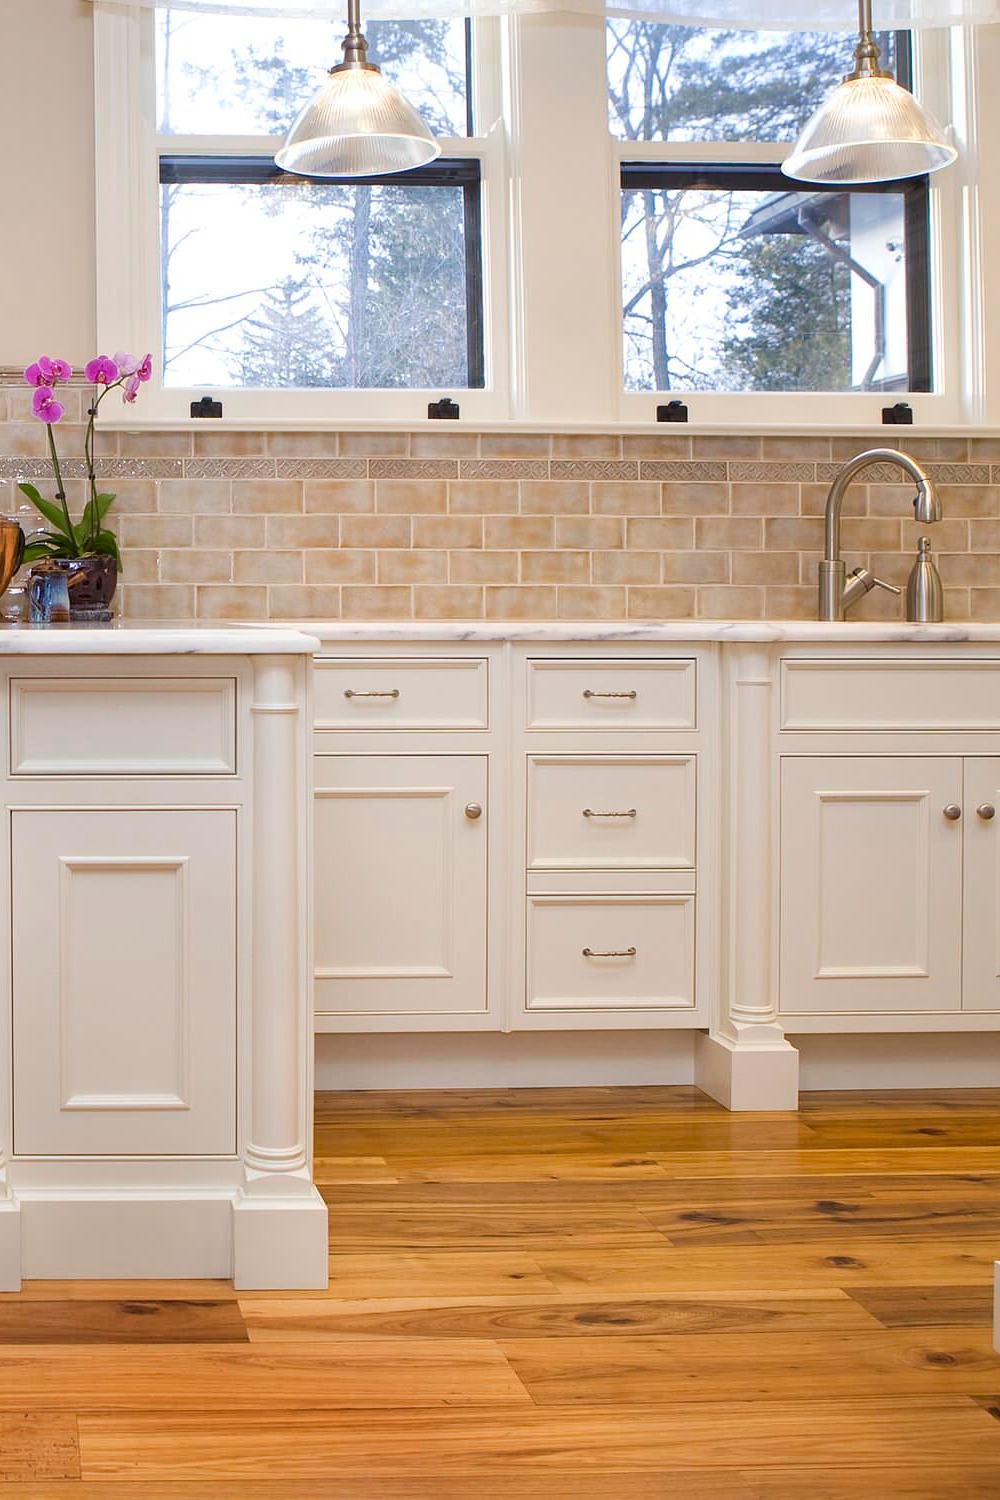 Light Wood Floor White Cabinets Beige Subway Backsplash Tile Marble Countertops